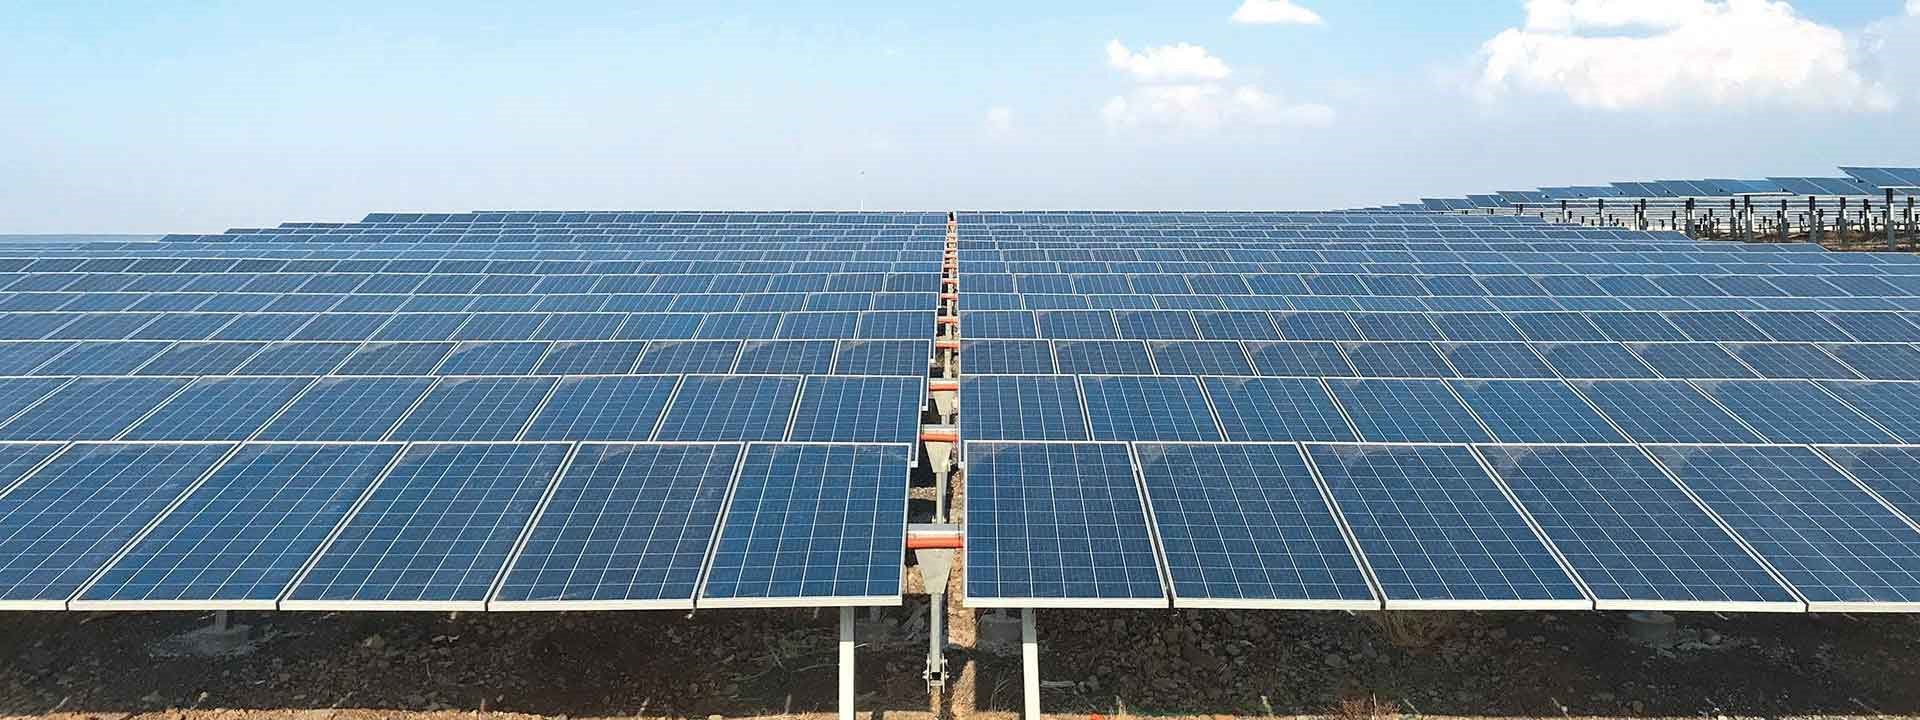 Solar Tracker project in Bengaluru- L&T construction